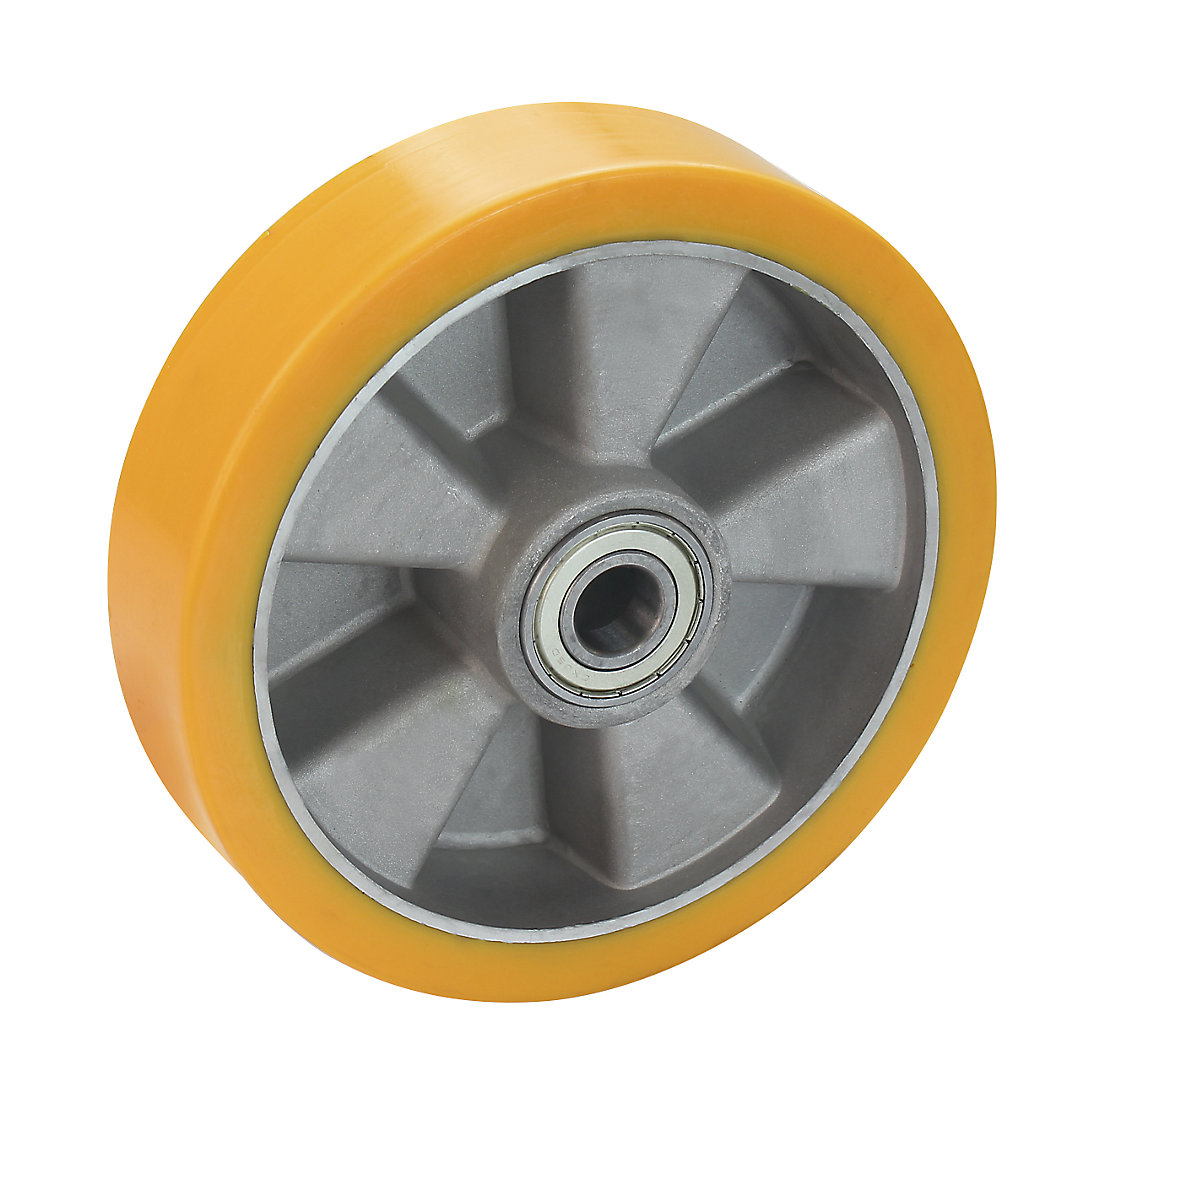 PU kotač na aluminijskom naplatku – Proroll